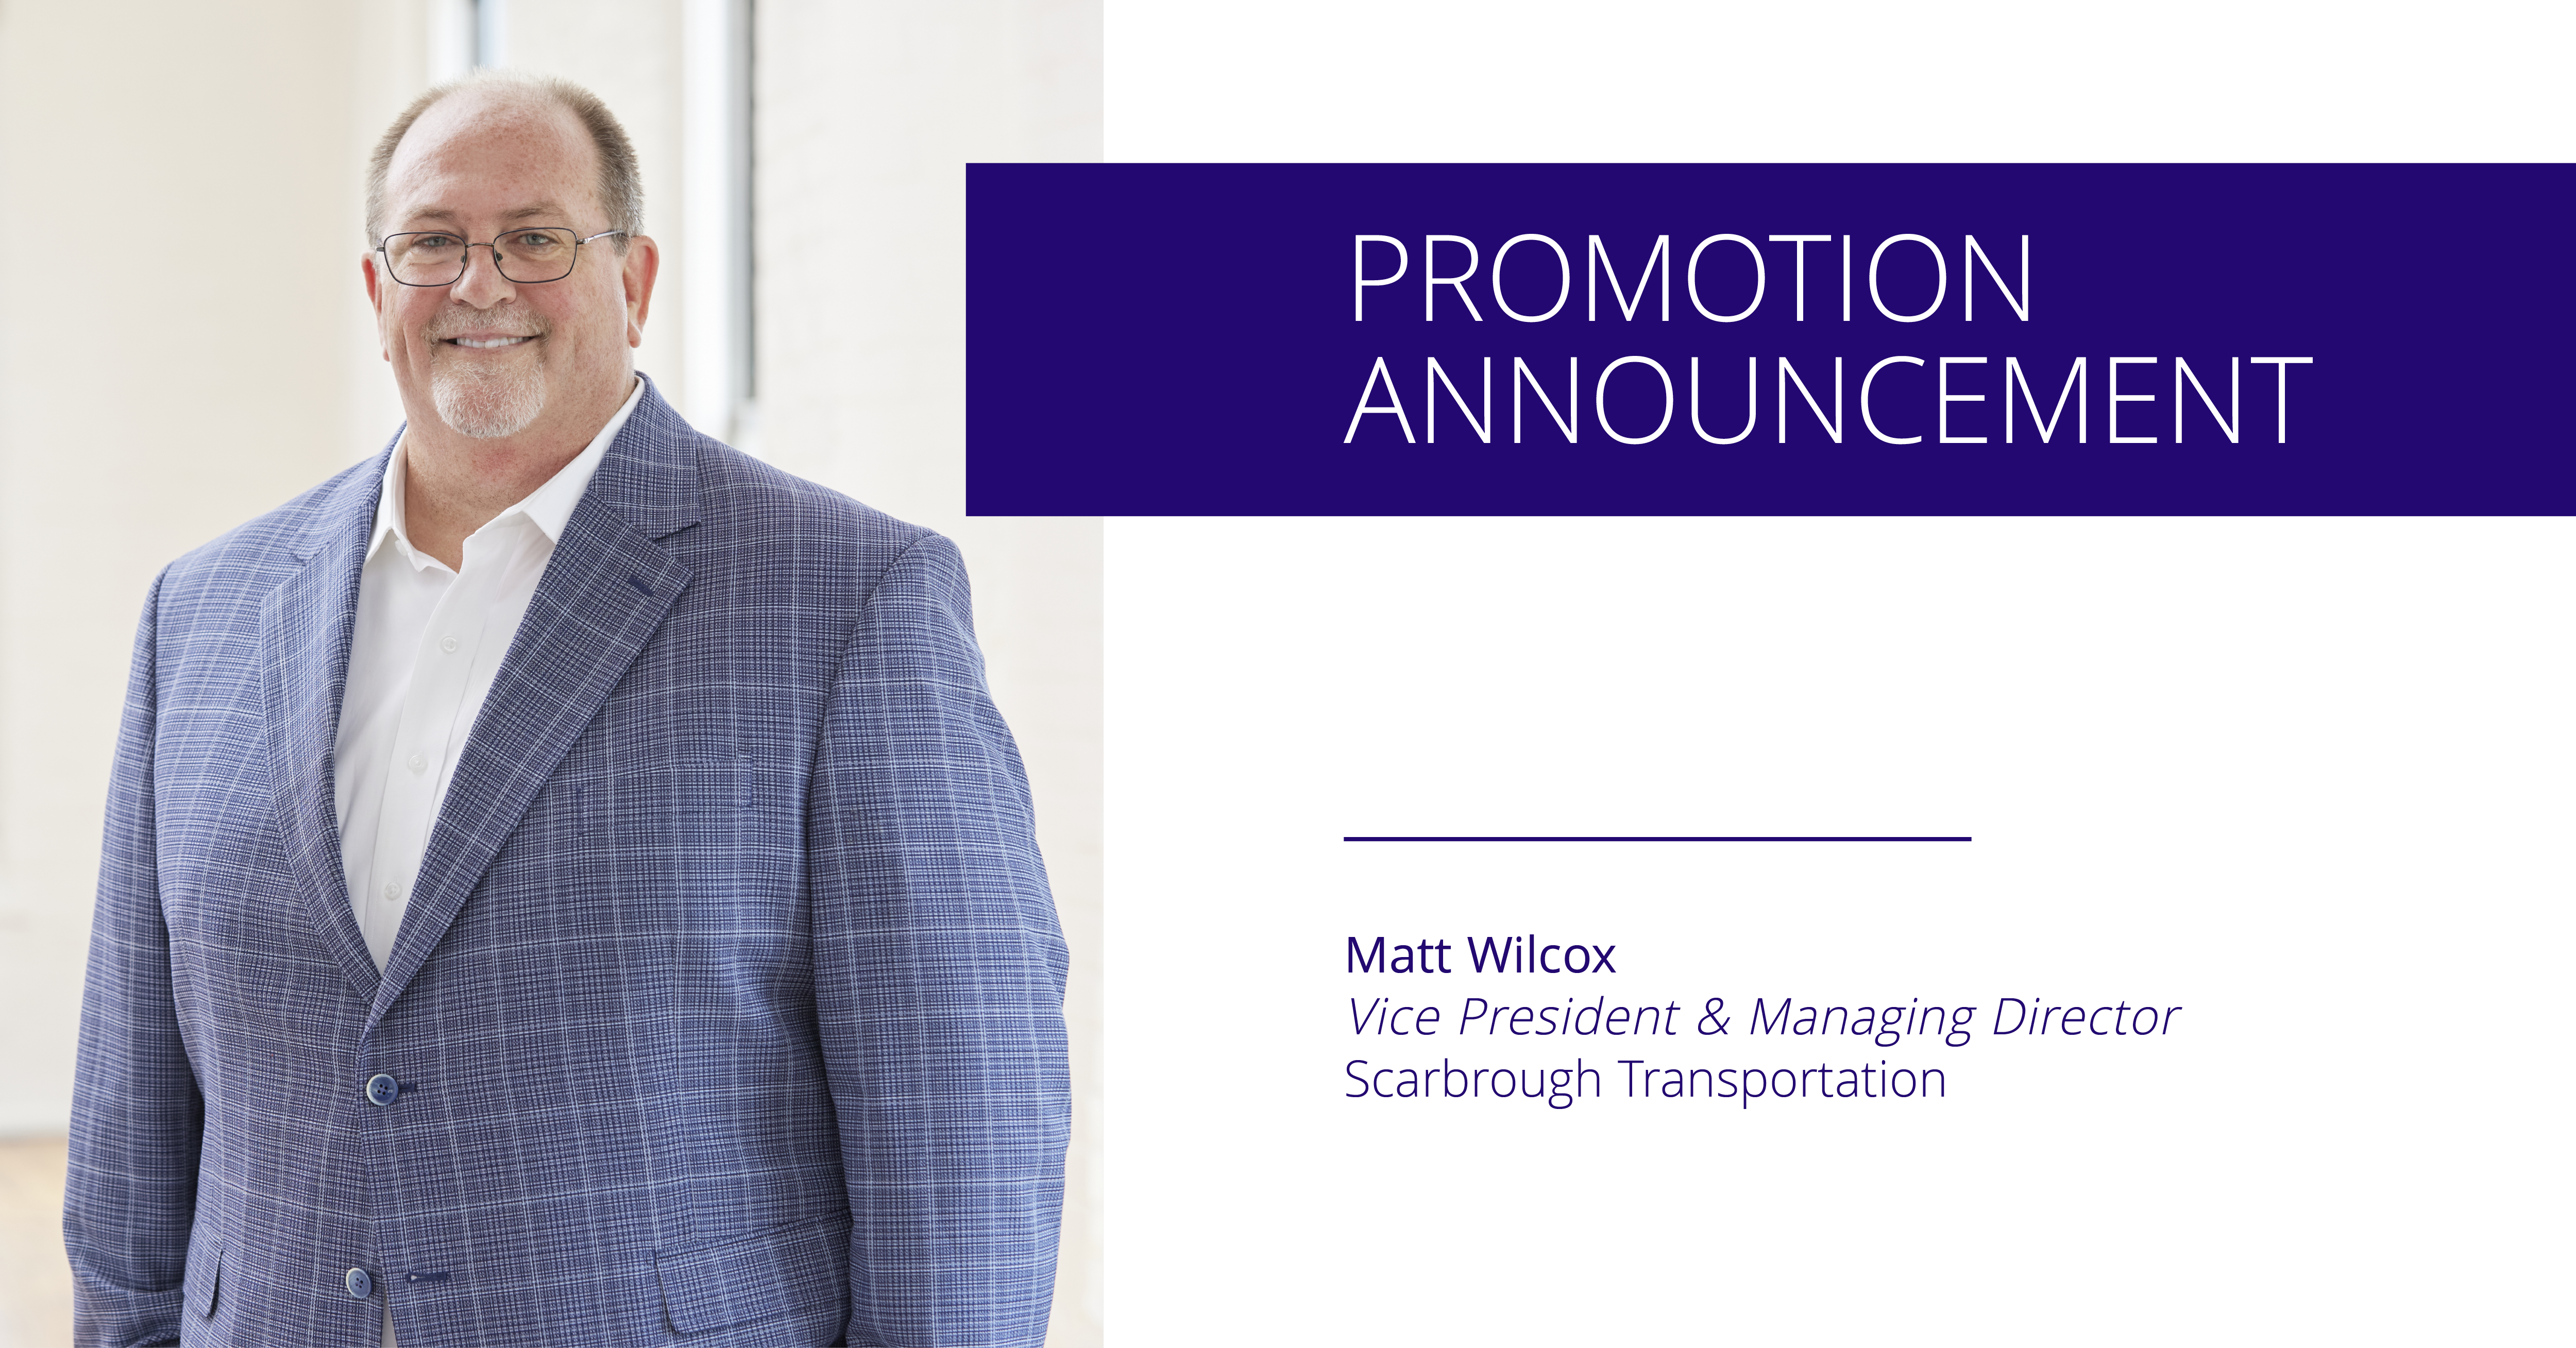 Matt Wilcox, Vice President & Managing Director